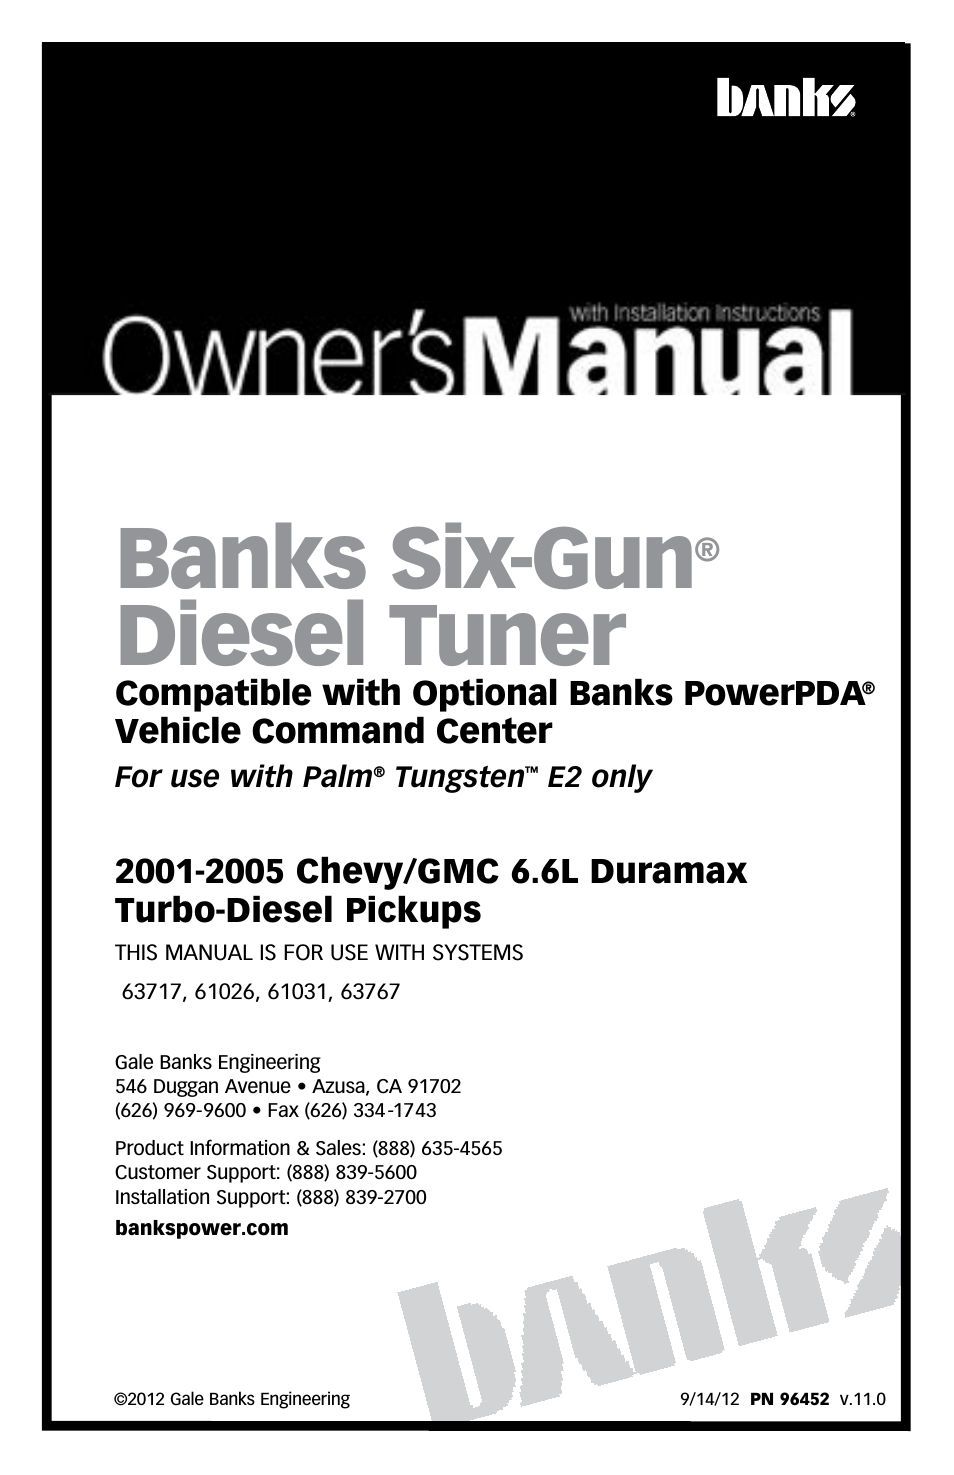 2001-2005 Chevy_GMC 6.6L Duramax Turbo-Diesel Pickups